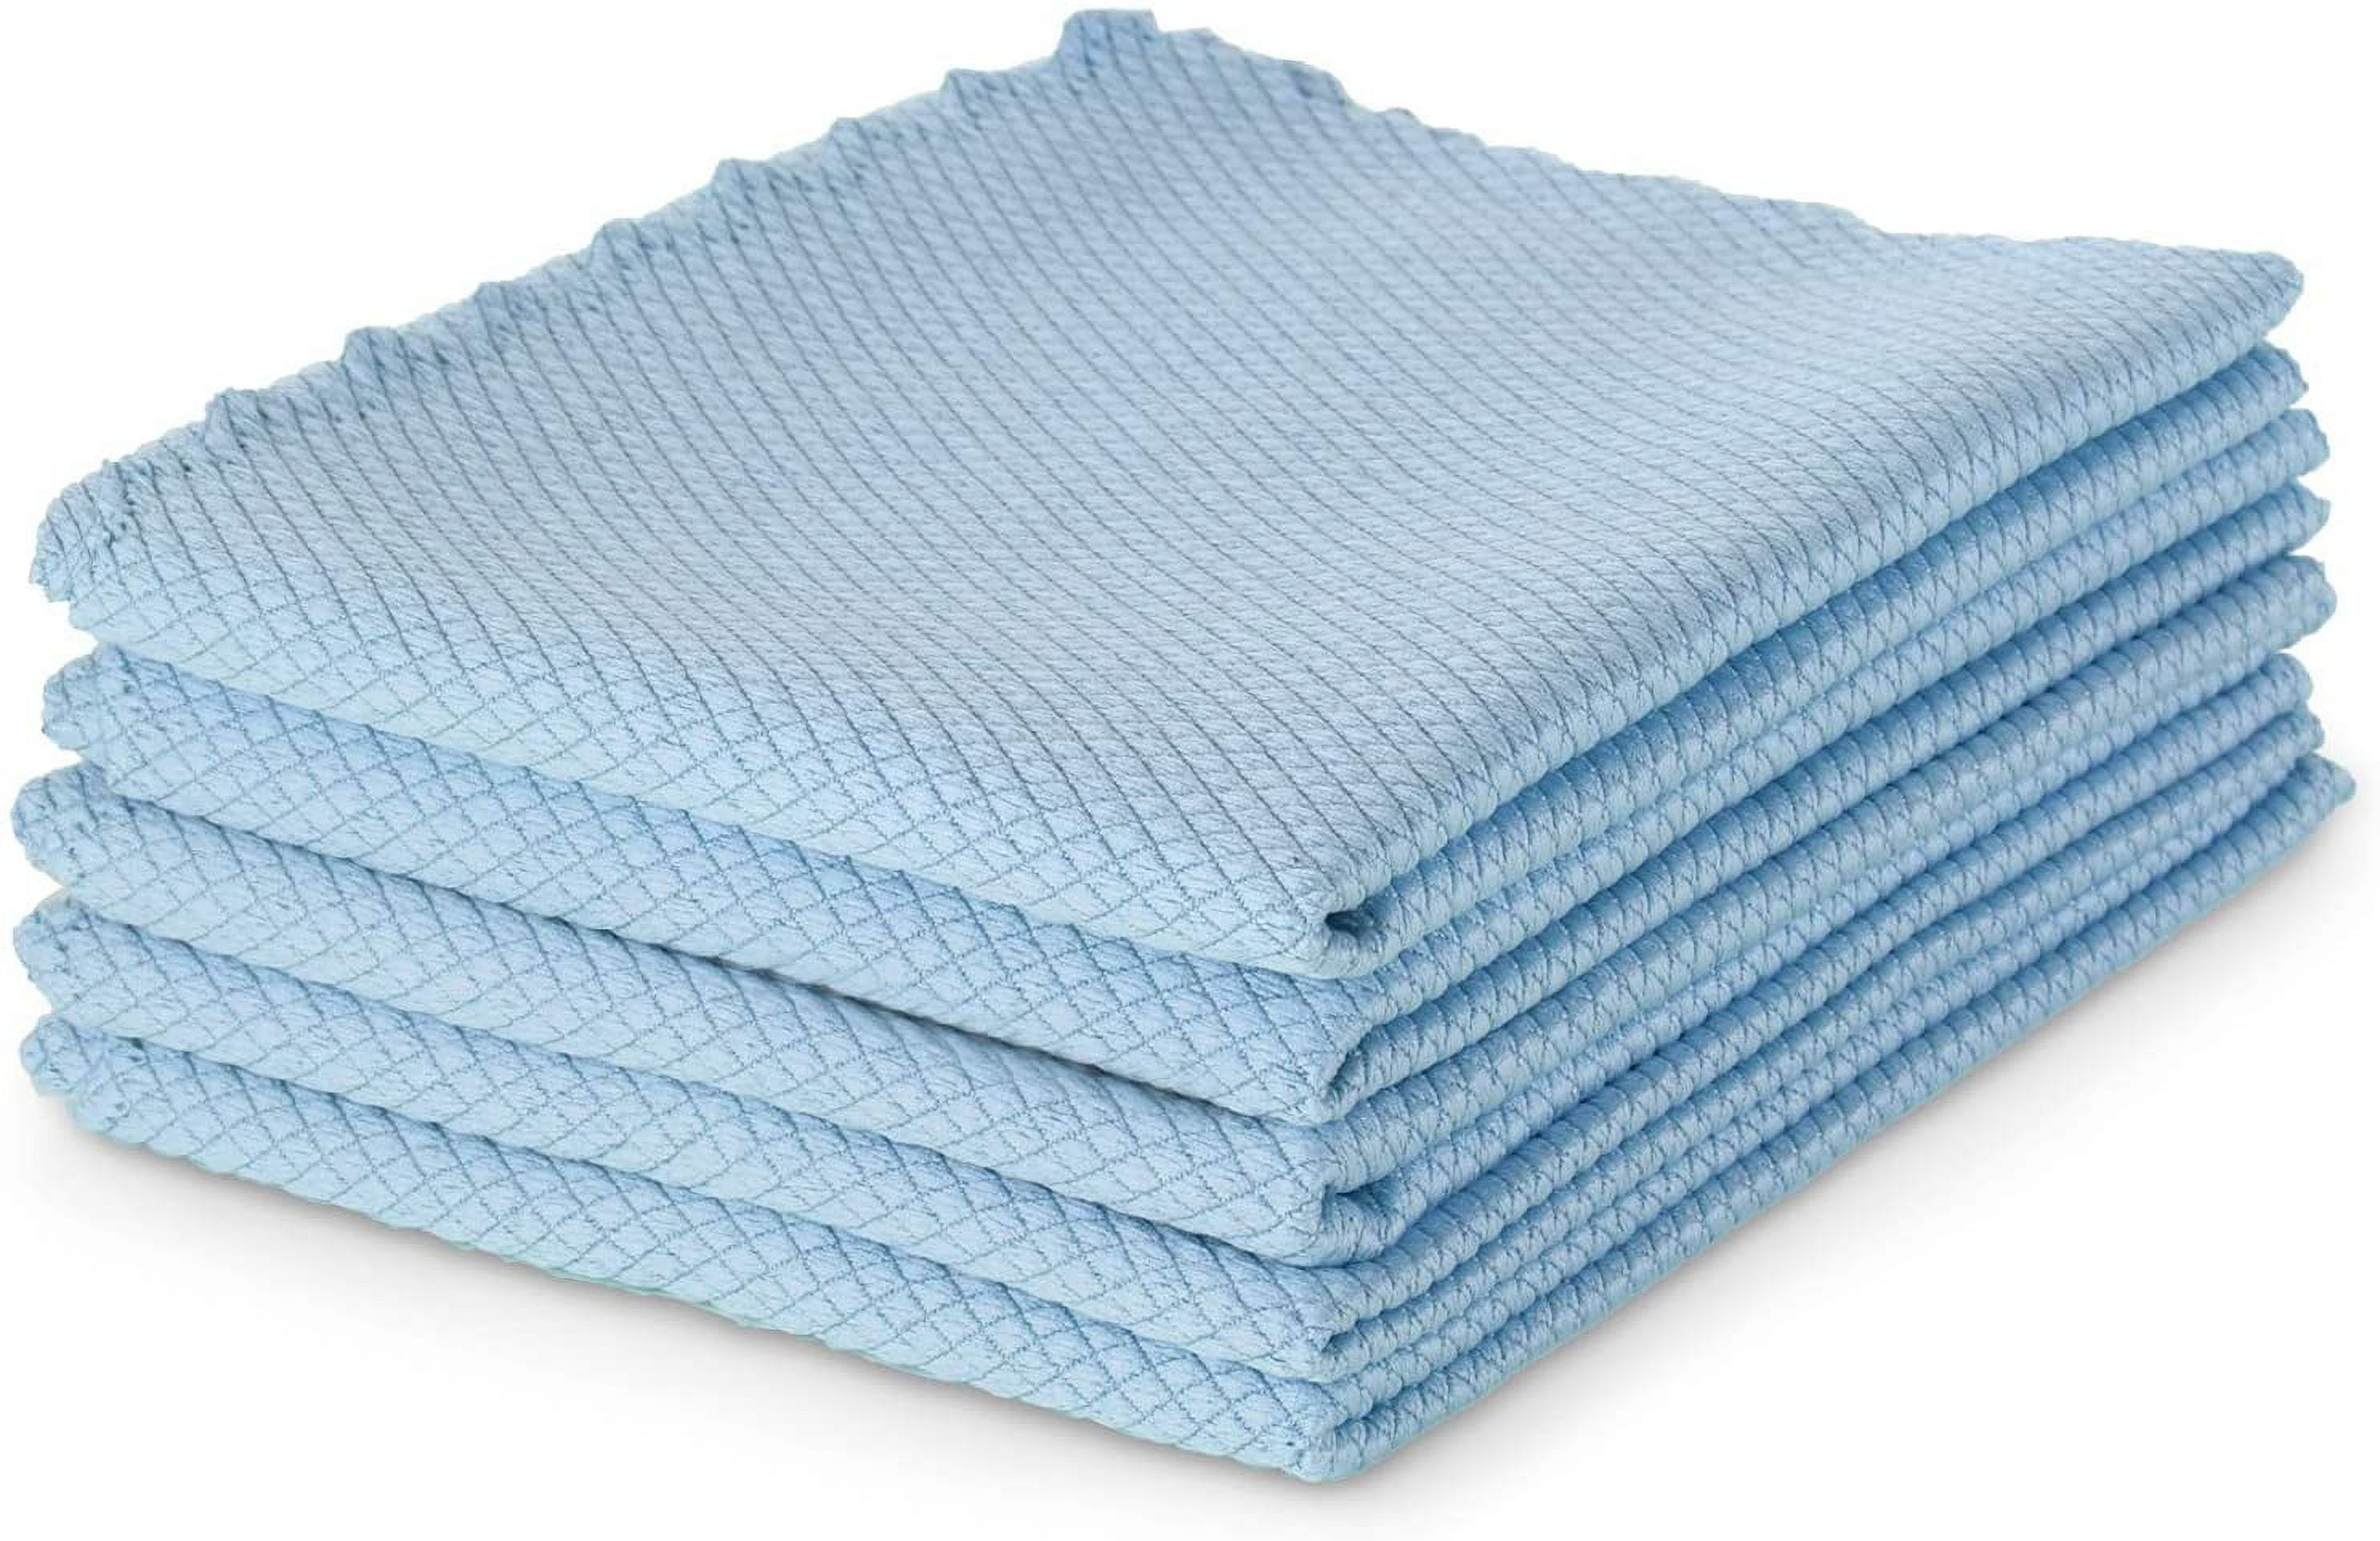 Lint Free Terry Towel - 12/Pkg